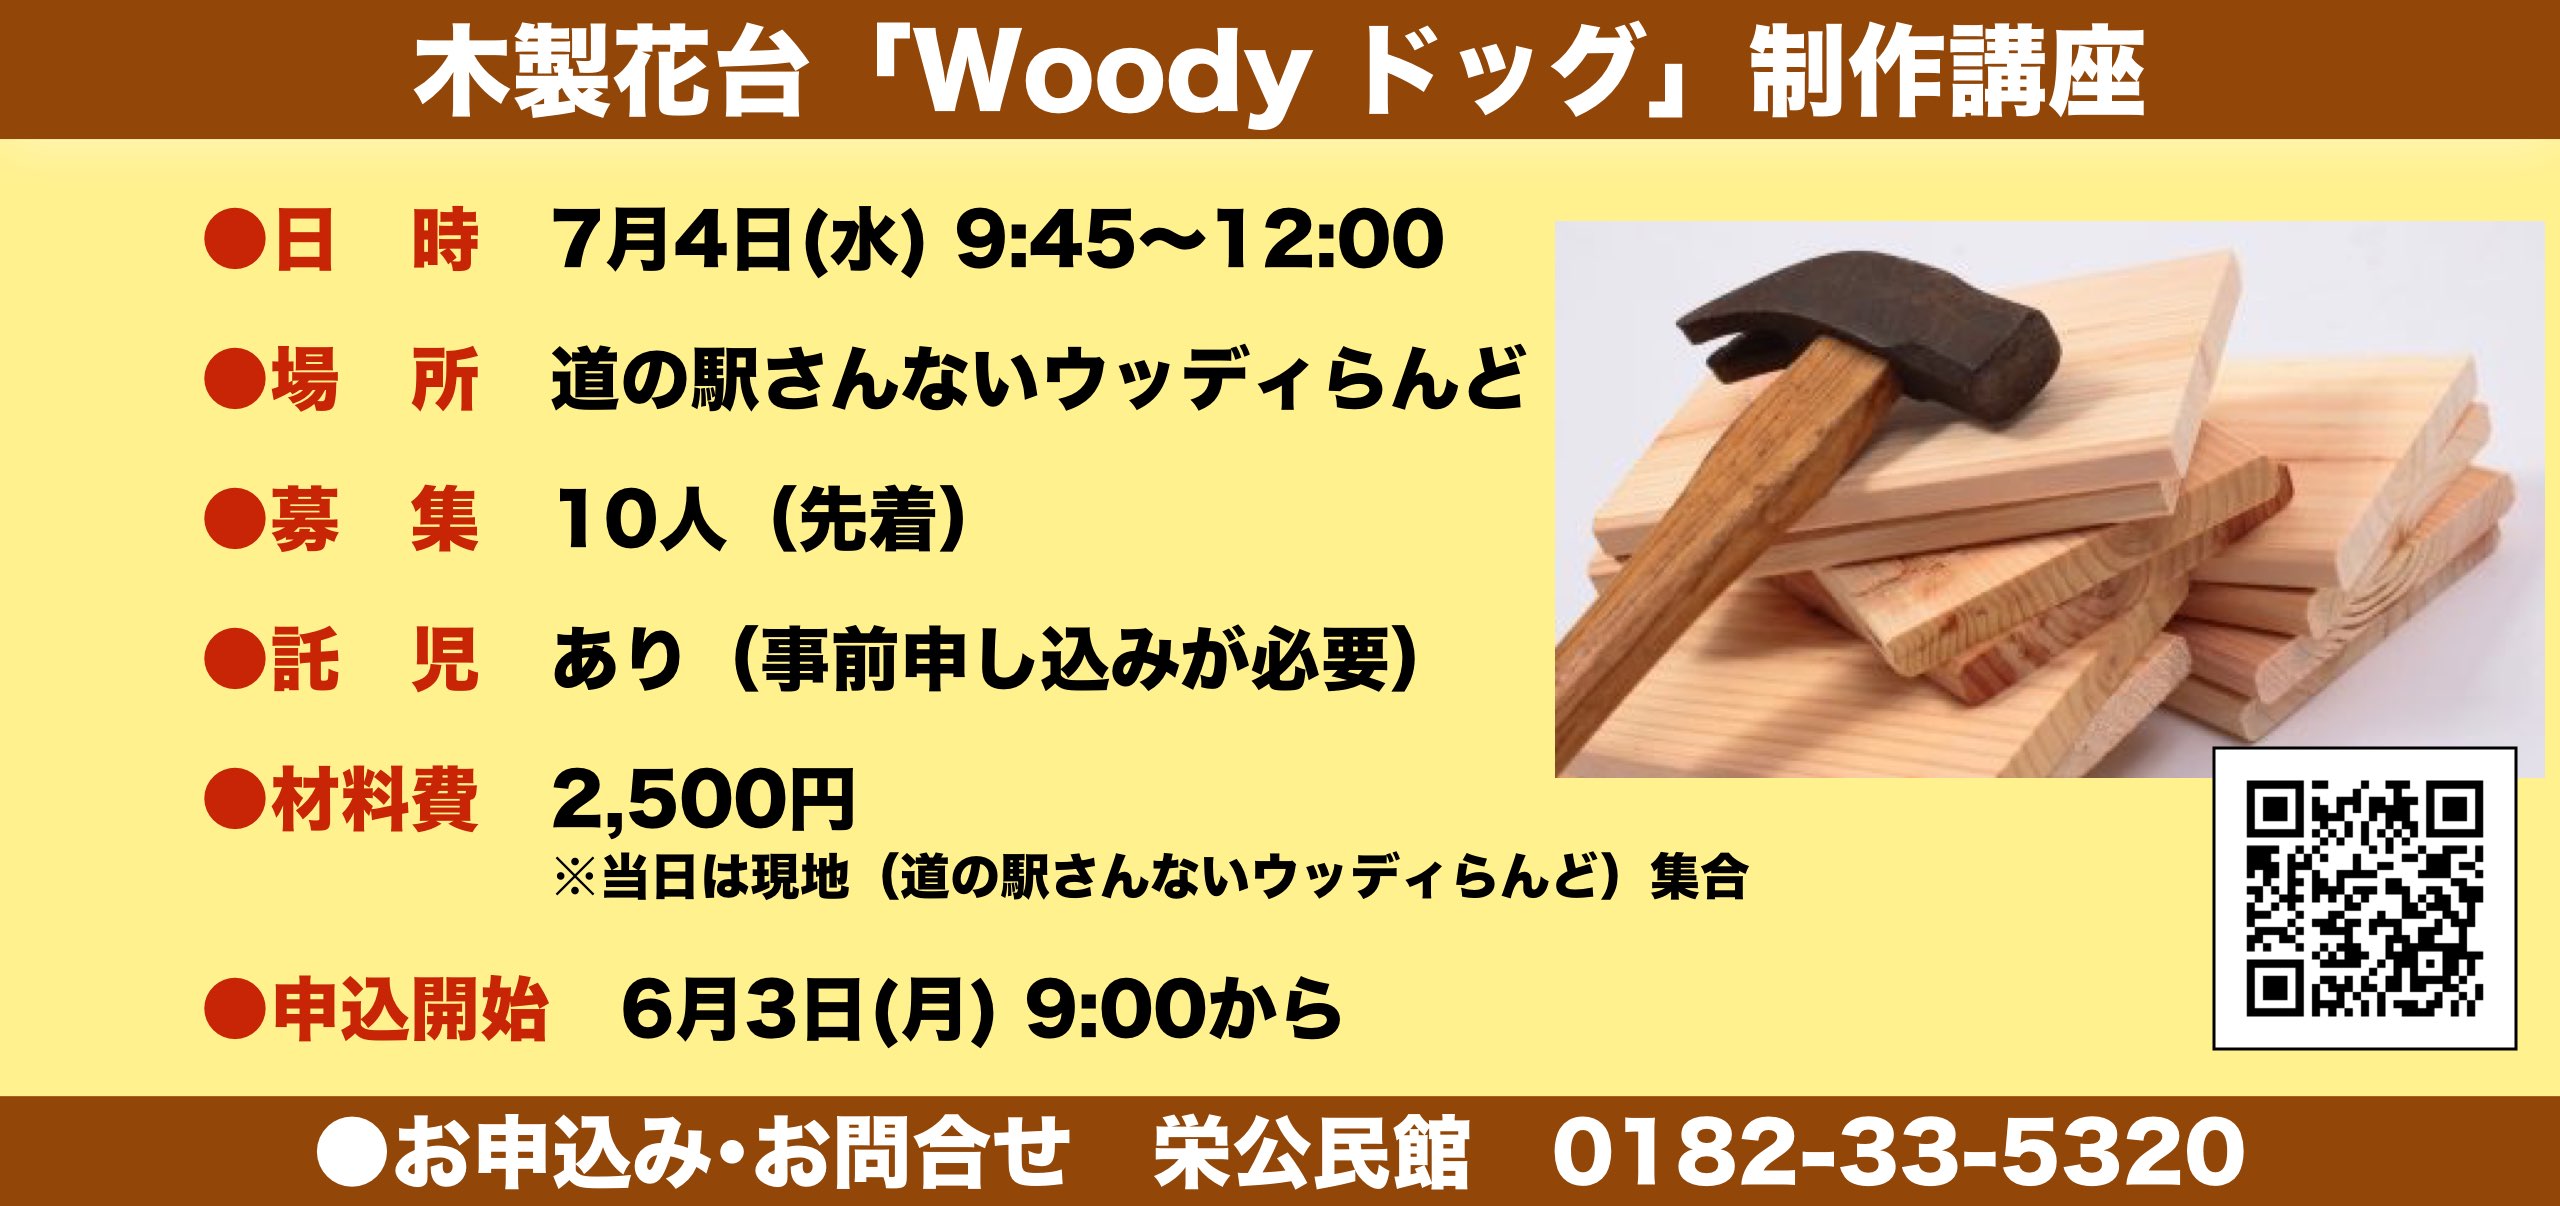 栄公民館主催 木製花台「Woody ドッグ」制作講座